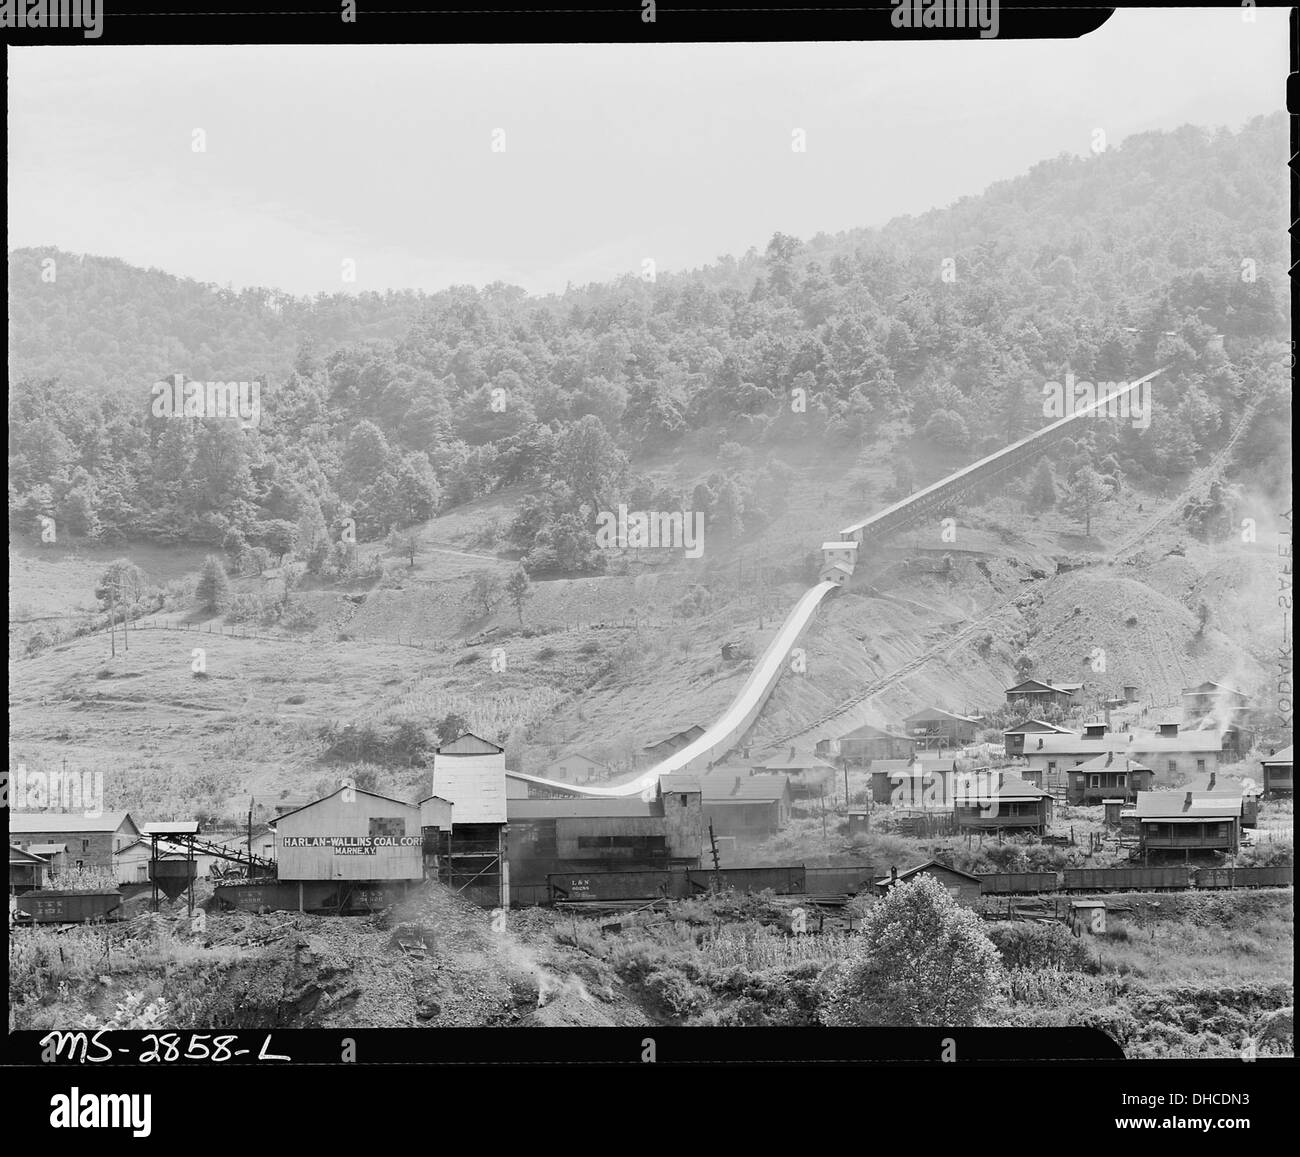 Tipple, head house and conveyor. Harlan-Wallin Coal Corporation, Marne 5E1 Mine, Verda, Harlan County, Kentucky. 541387 Stock Photo